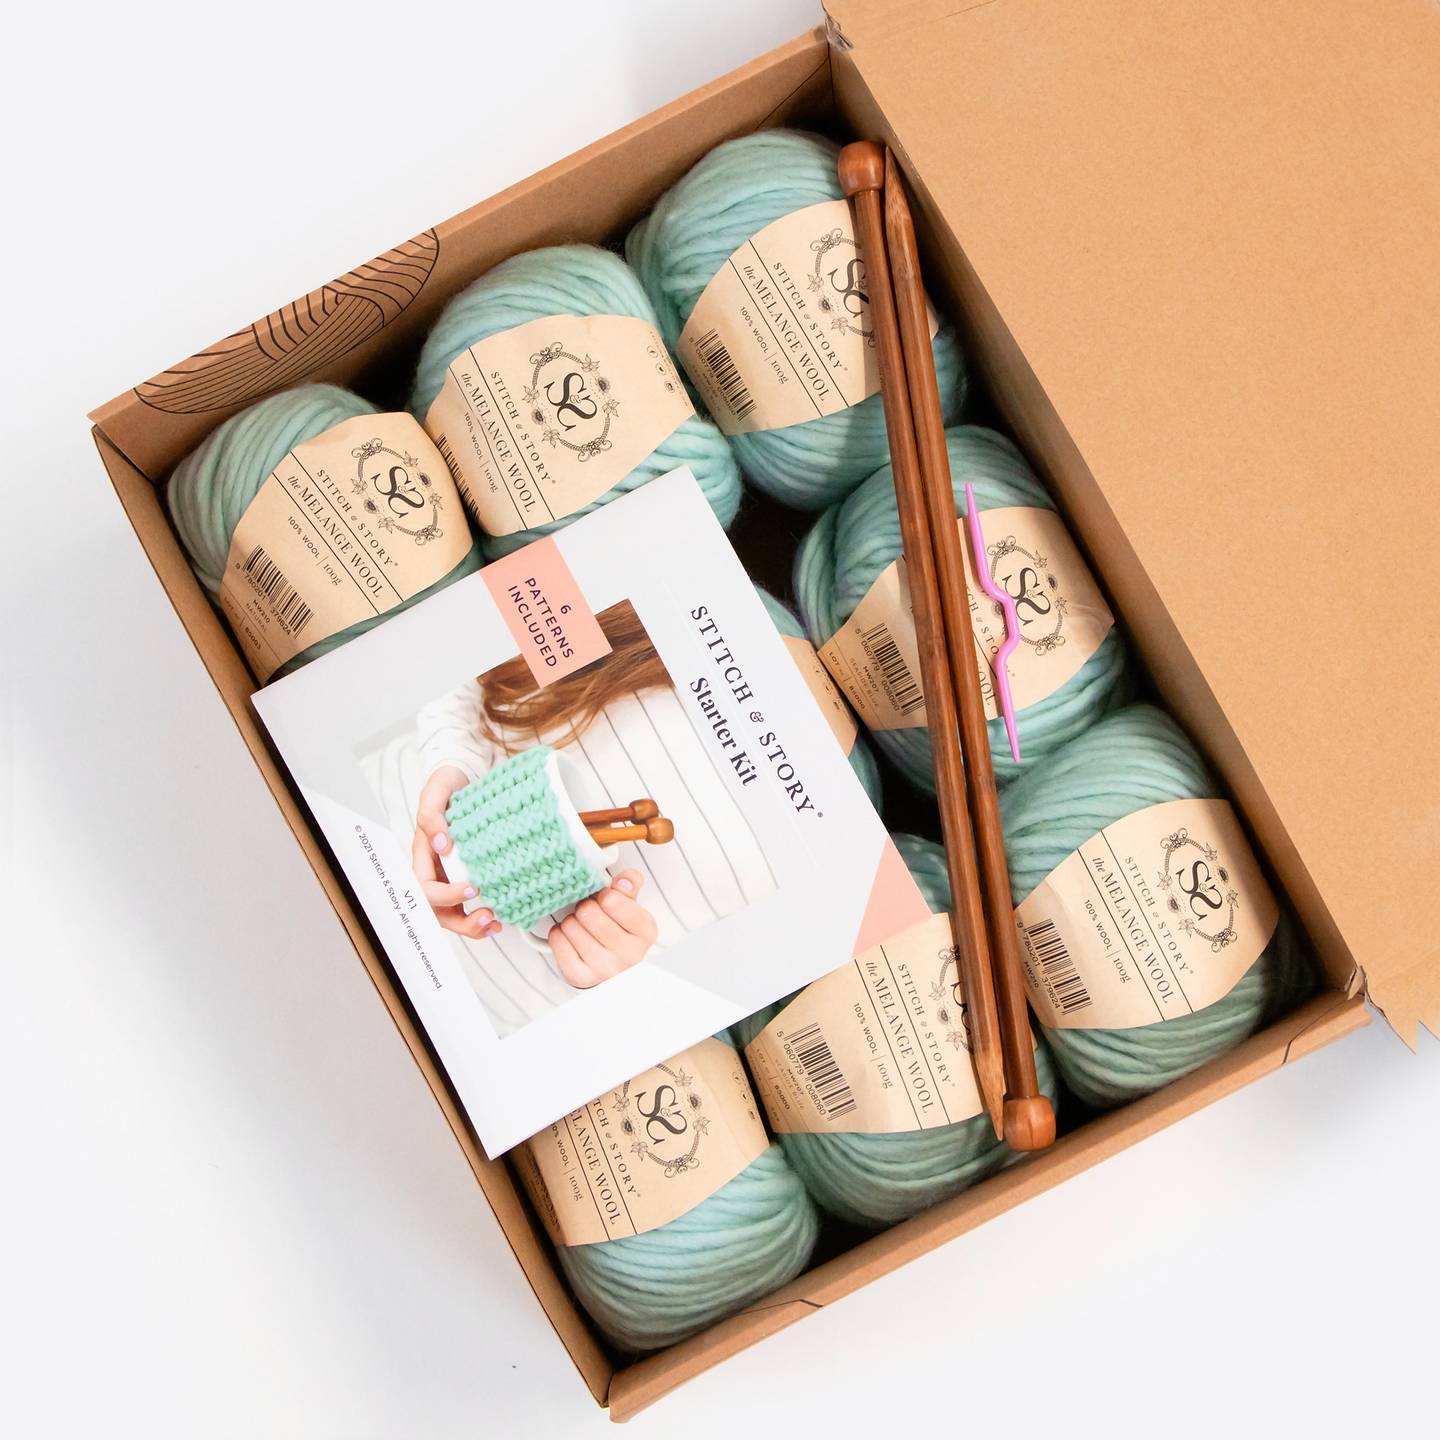 Knitting starter kits: everything you need to start knitting in